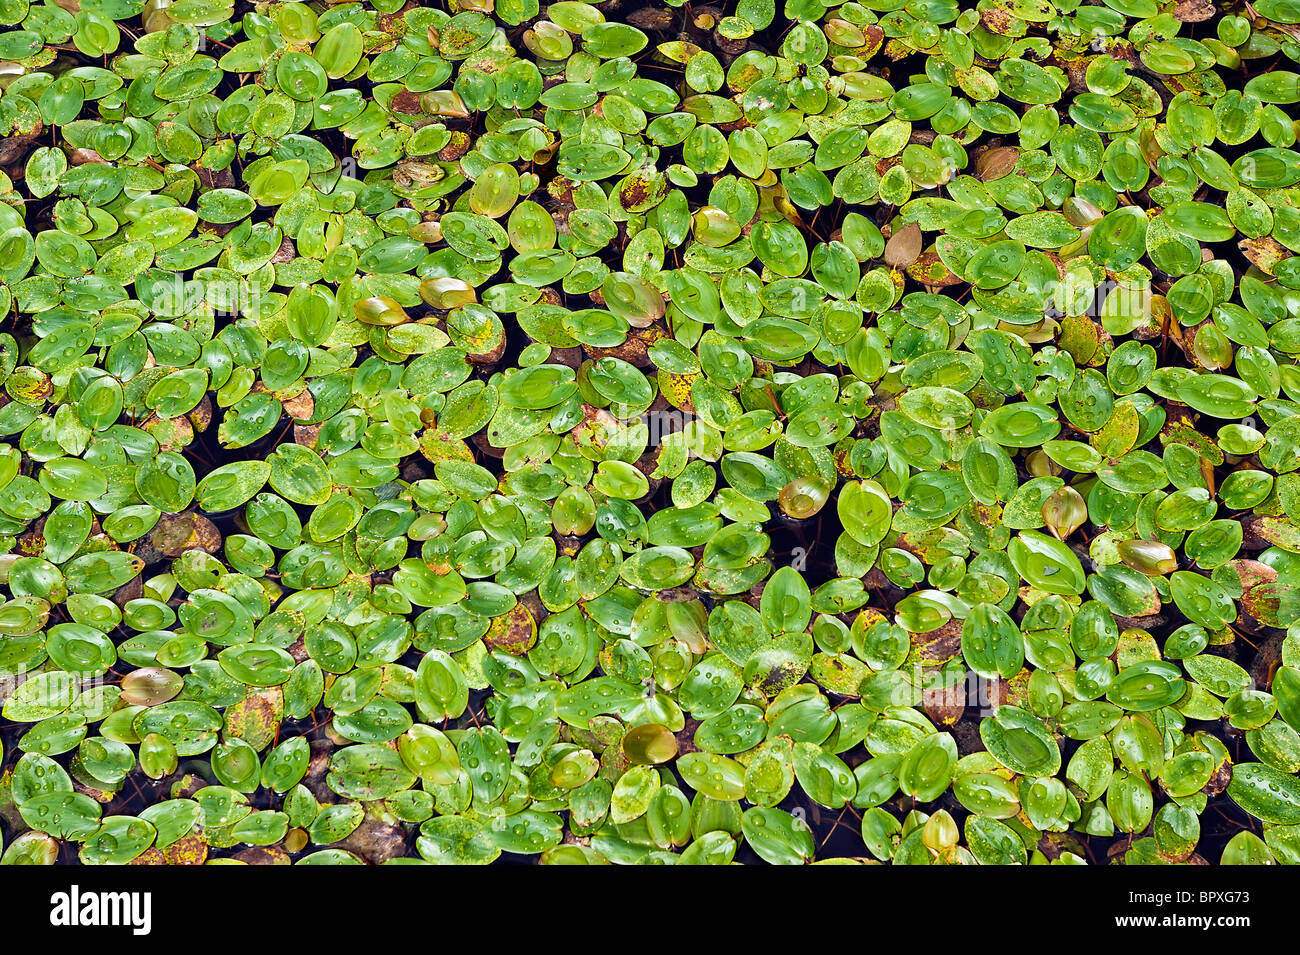 Aquatic plant, duckweed in a pond garden. Stock Photo